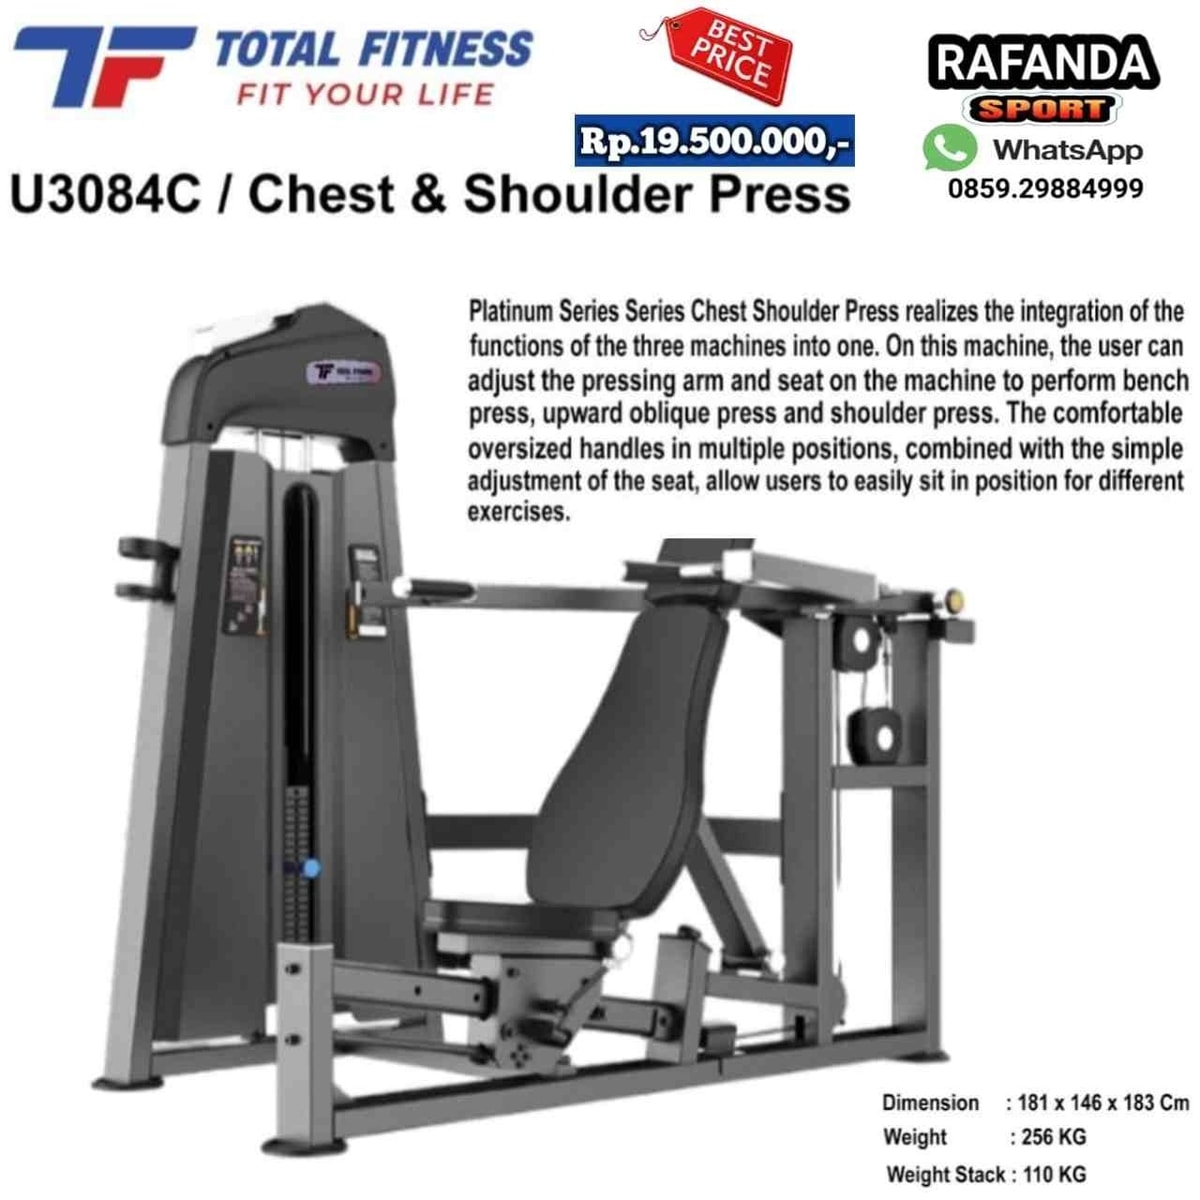 Chest & Shoulder Press U3084C